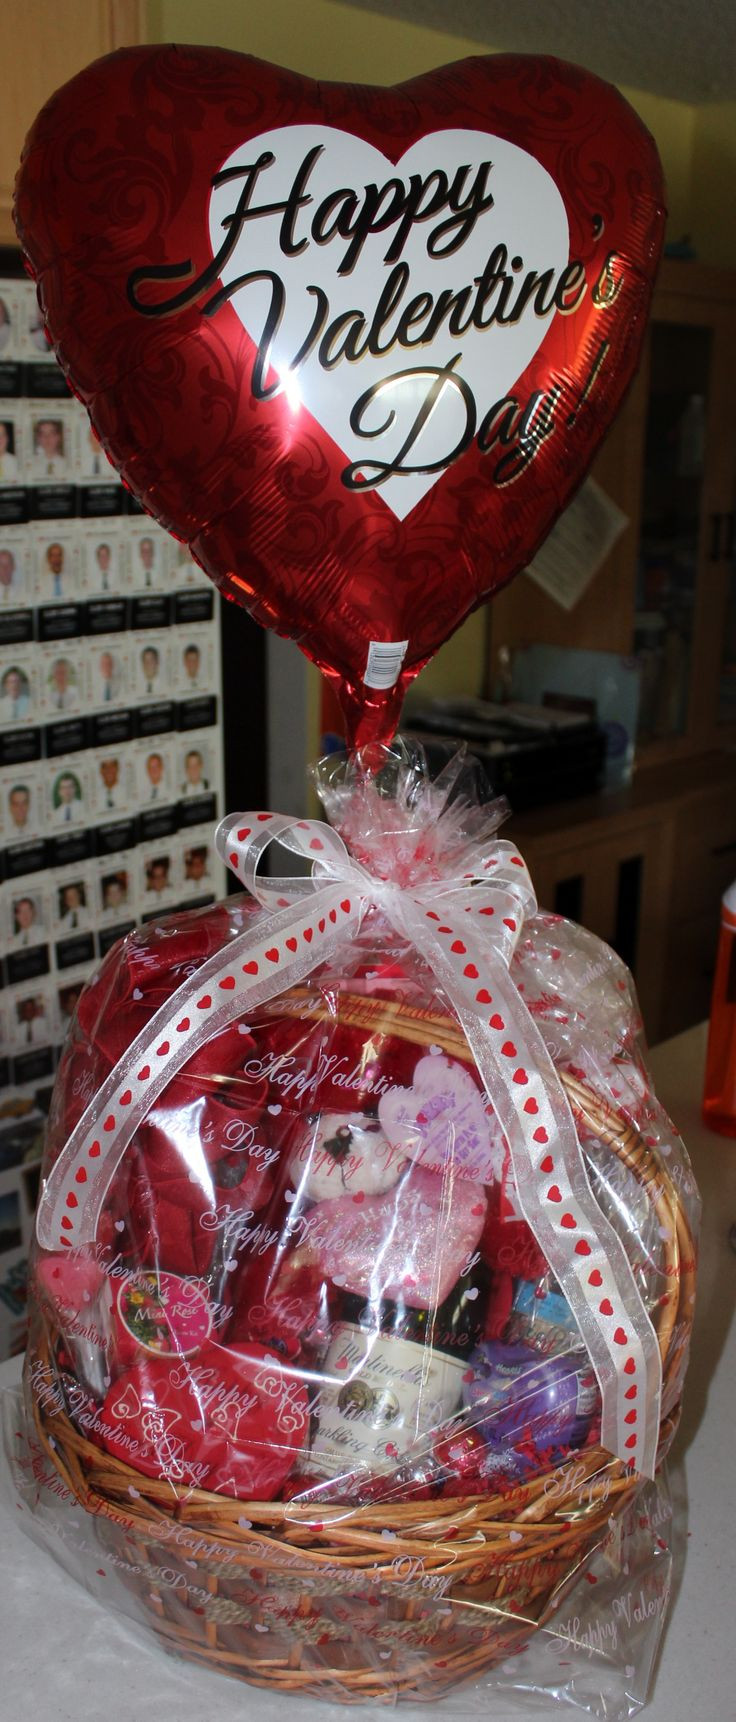 Valentine'S Day Gift Delivery Ideas
 Best 25 Valentine t baskets ideas on Pinterest